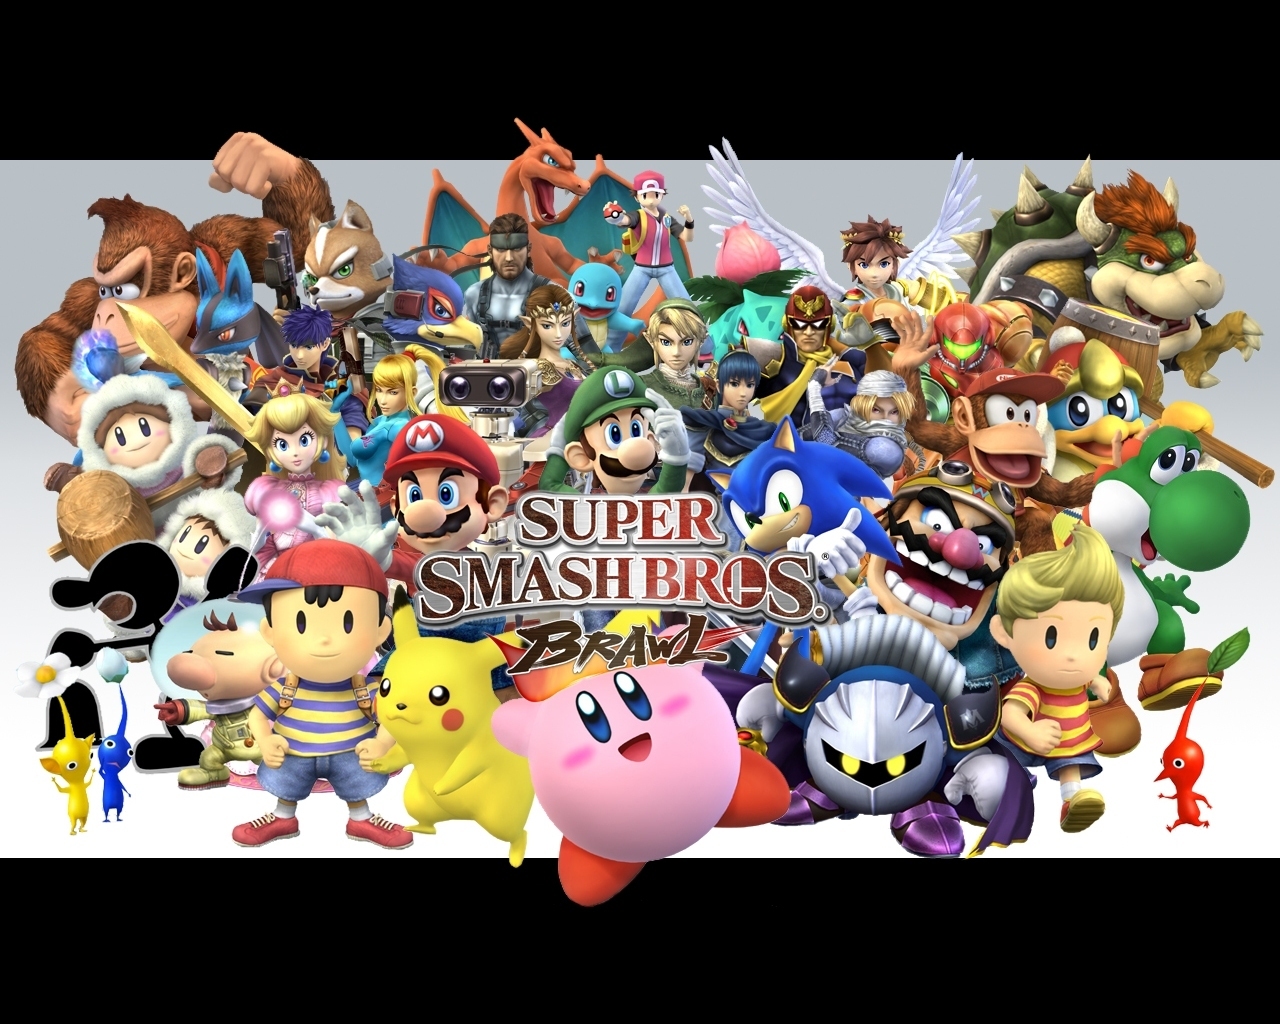 "Super Smash Bros. Brawl" desktop wallpaper (1280 x 1024 pixels)